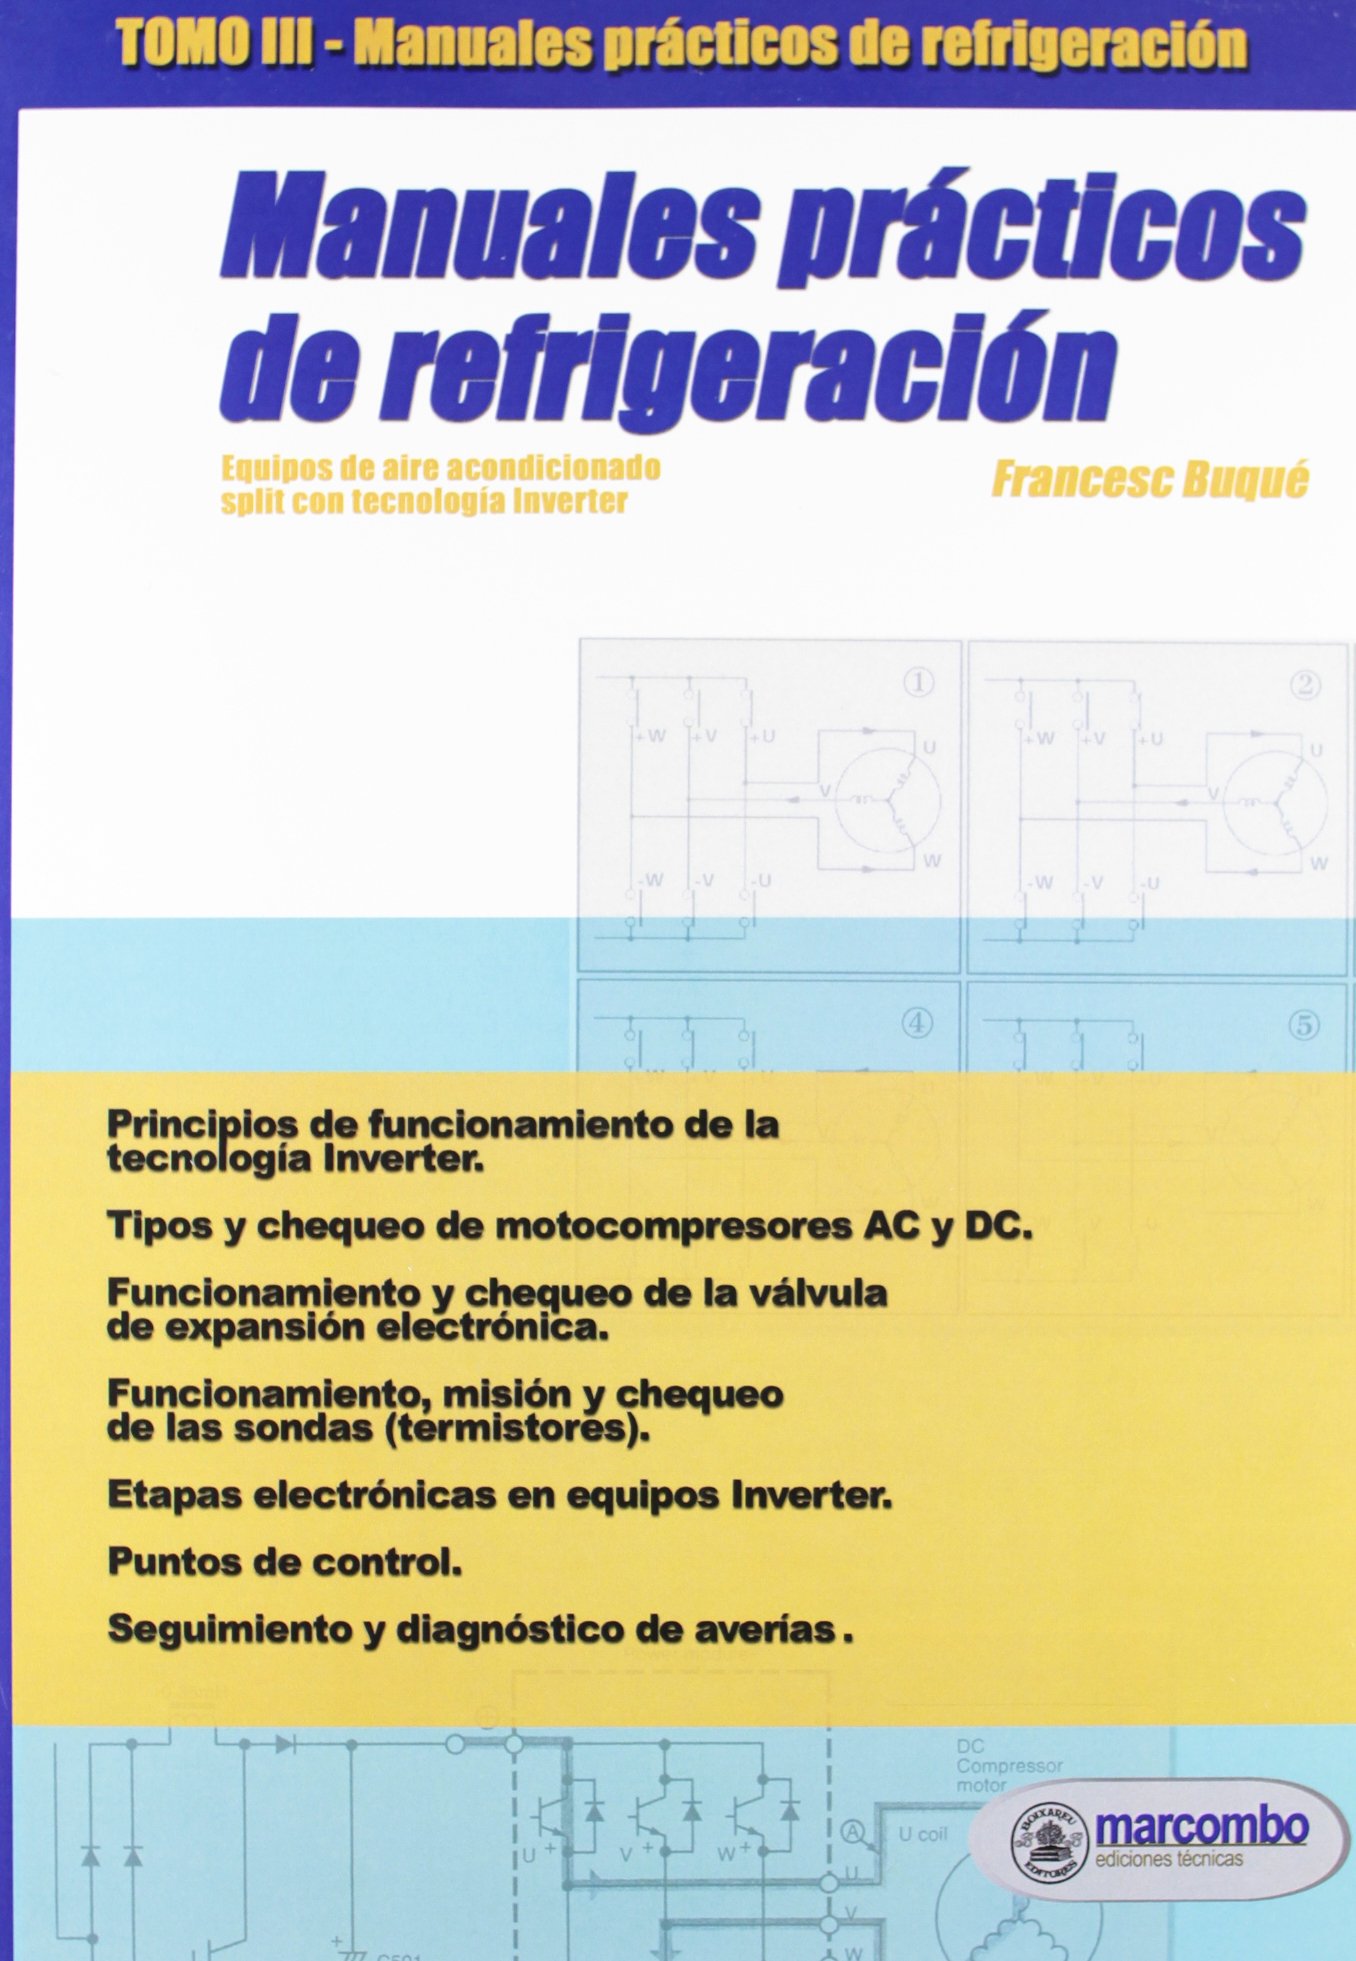 manual de aire acondicionado carrier marcombo pdf